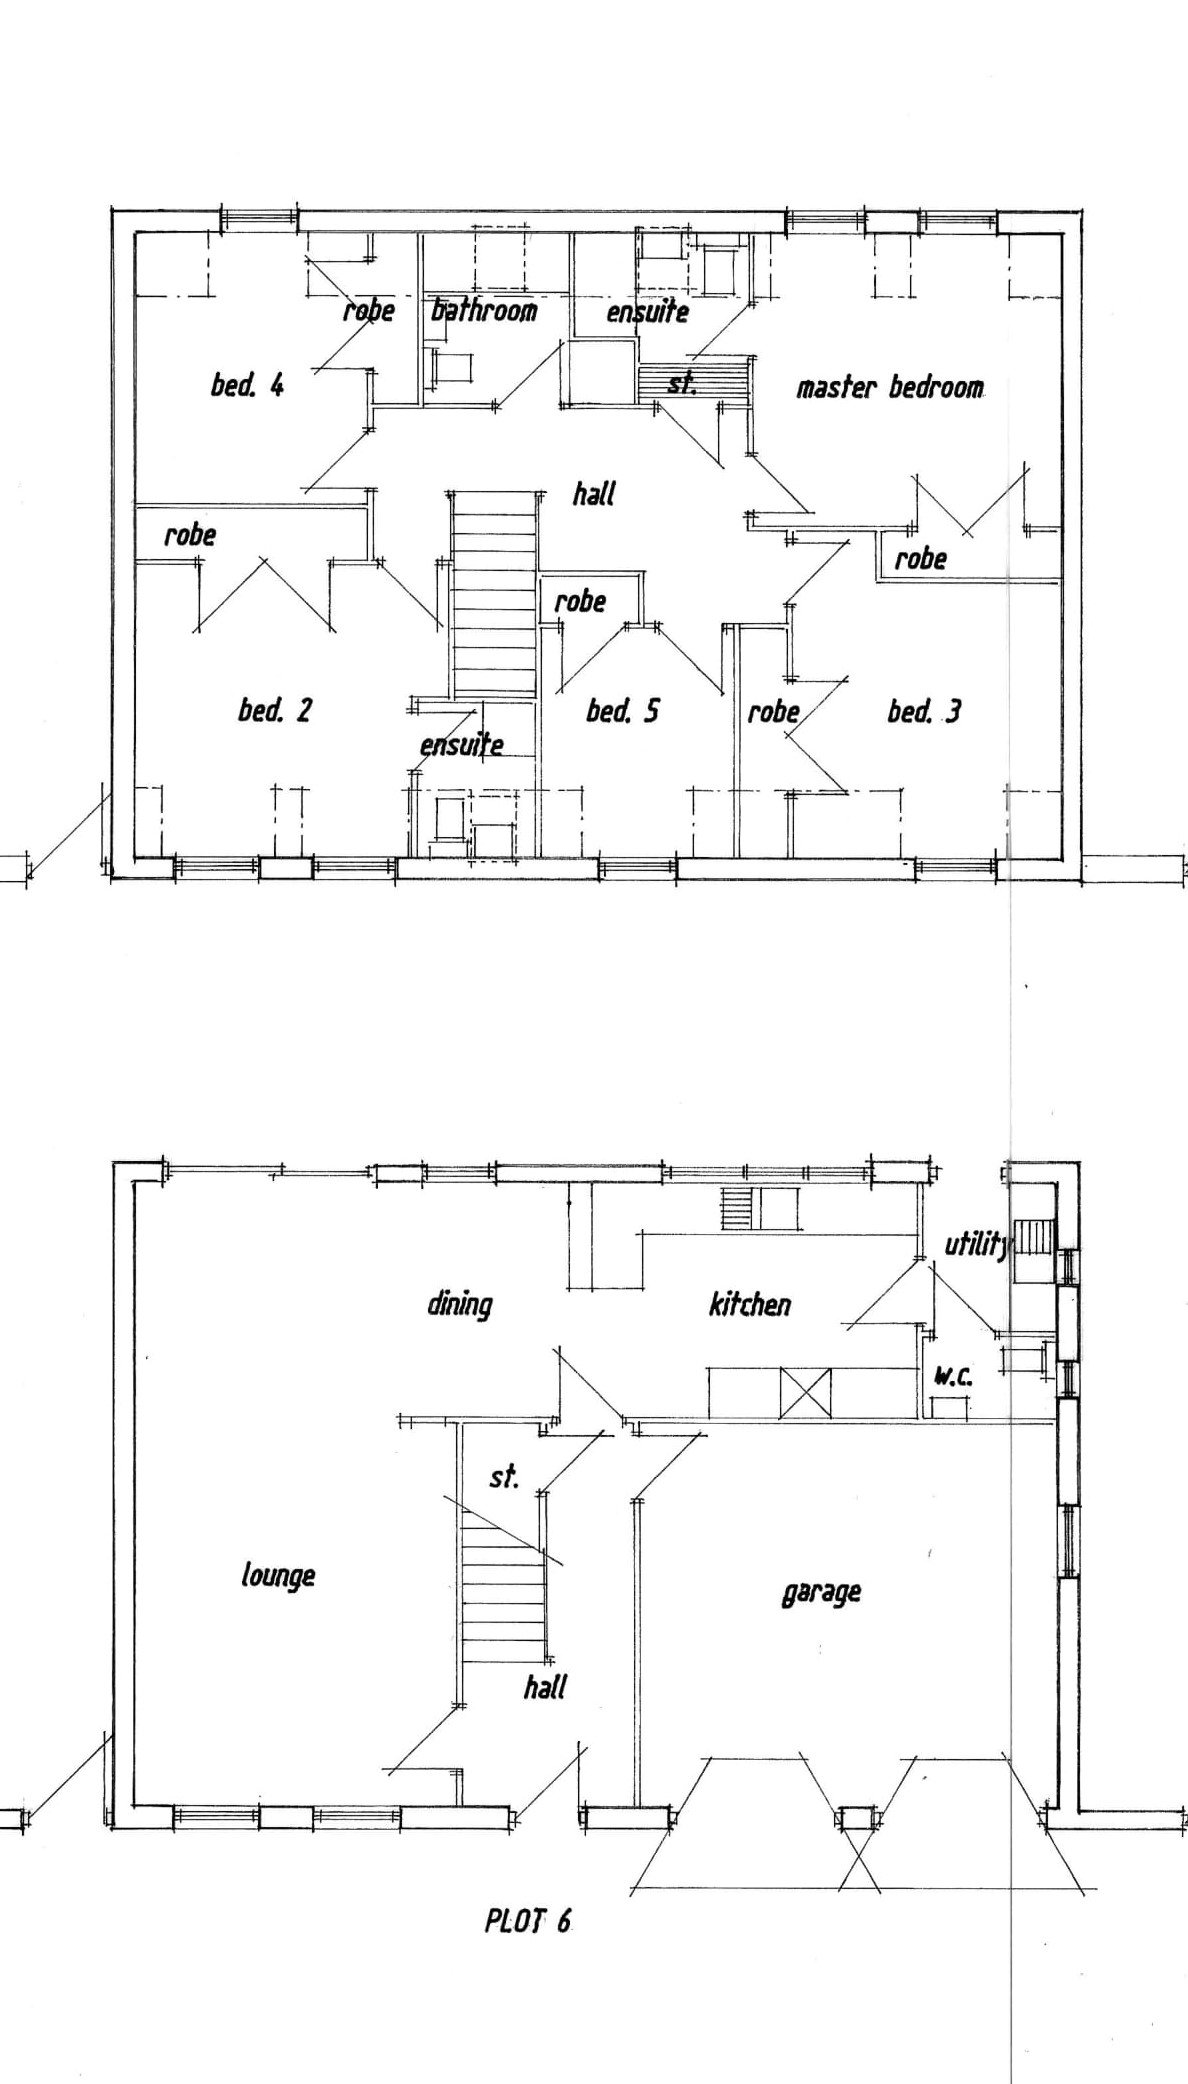 Plot 6 Floor Plans